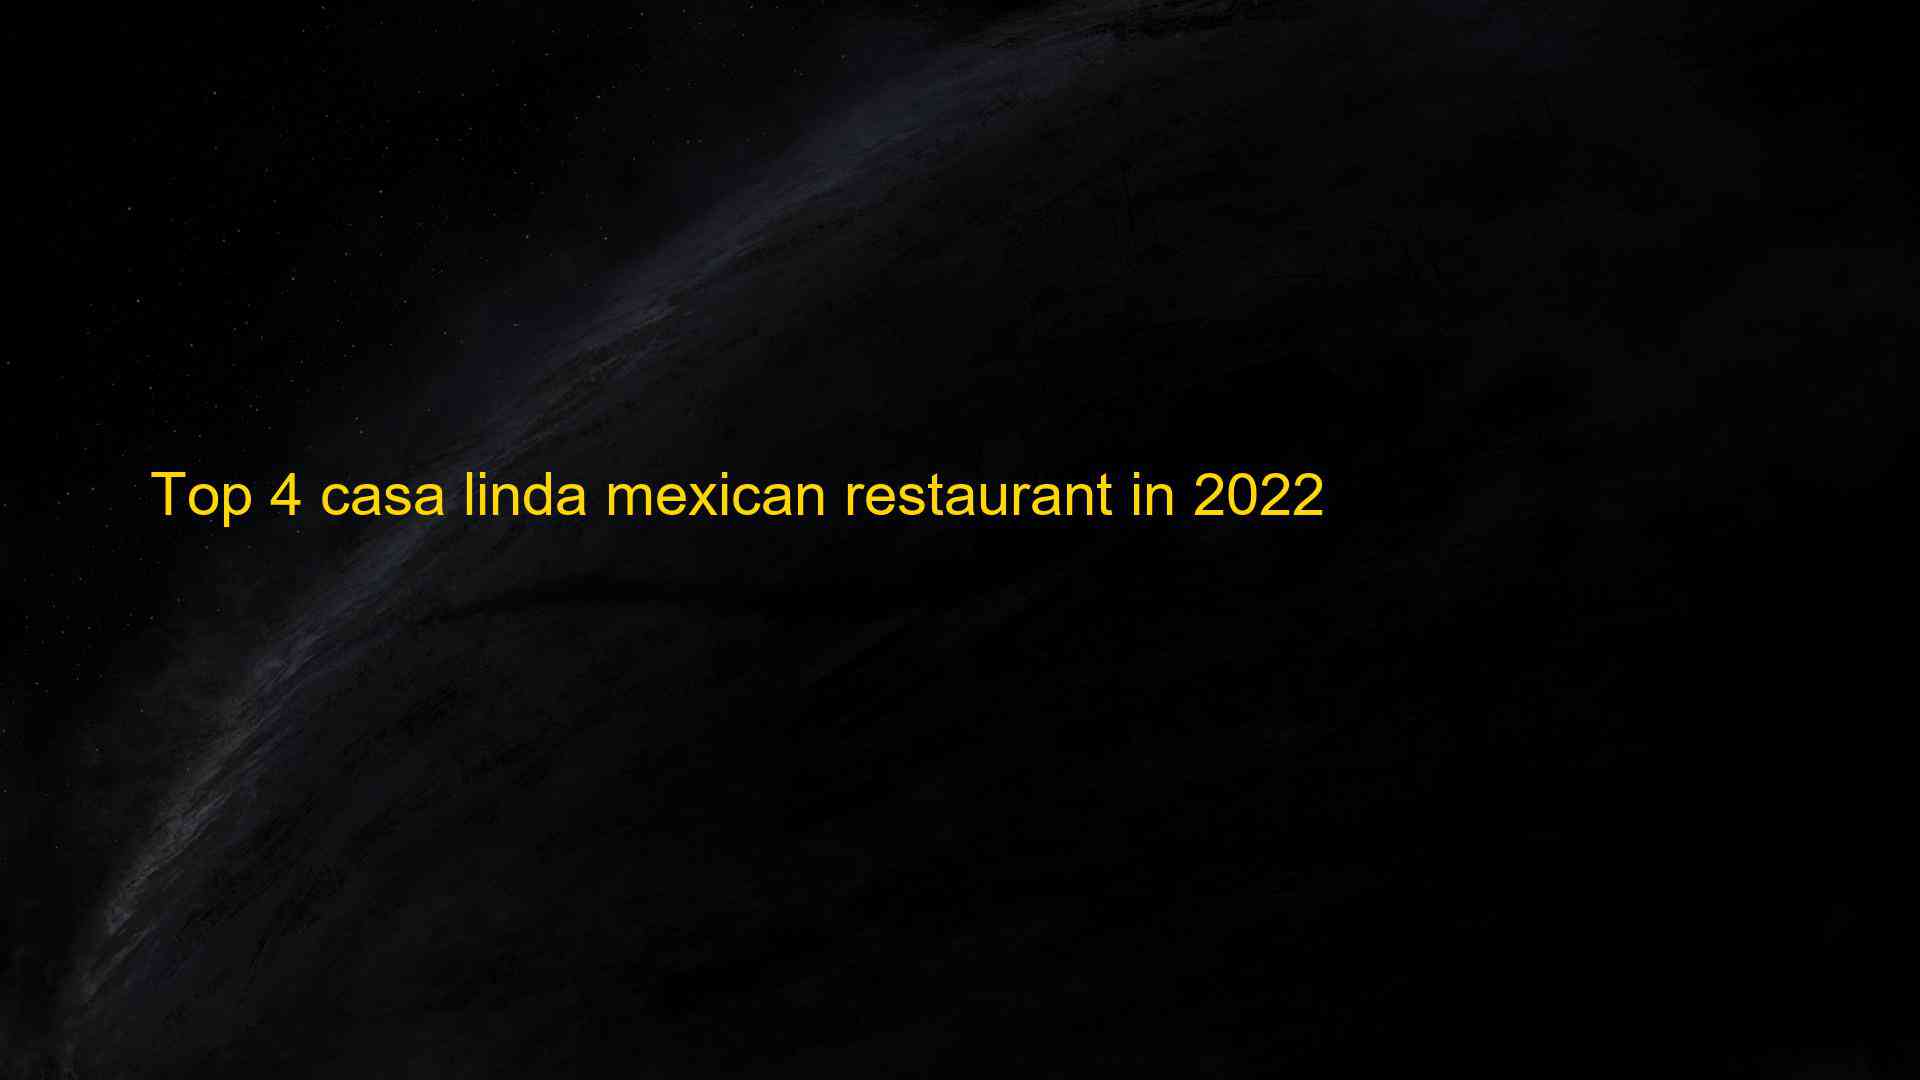 Top 4 casa linda mexican restaurant in 2022 1662846301